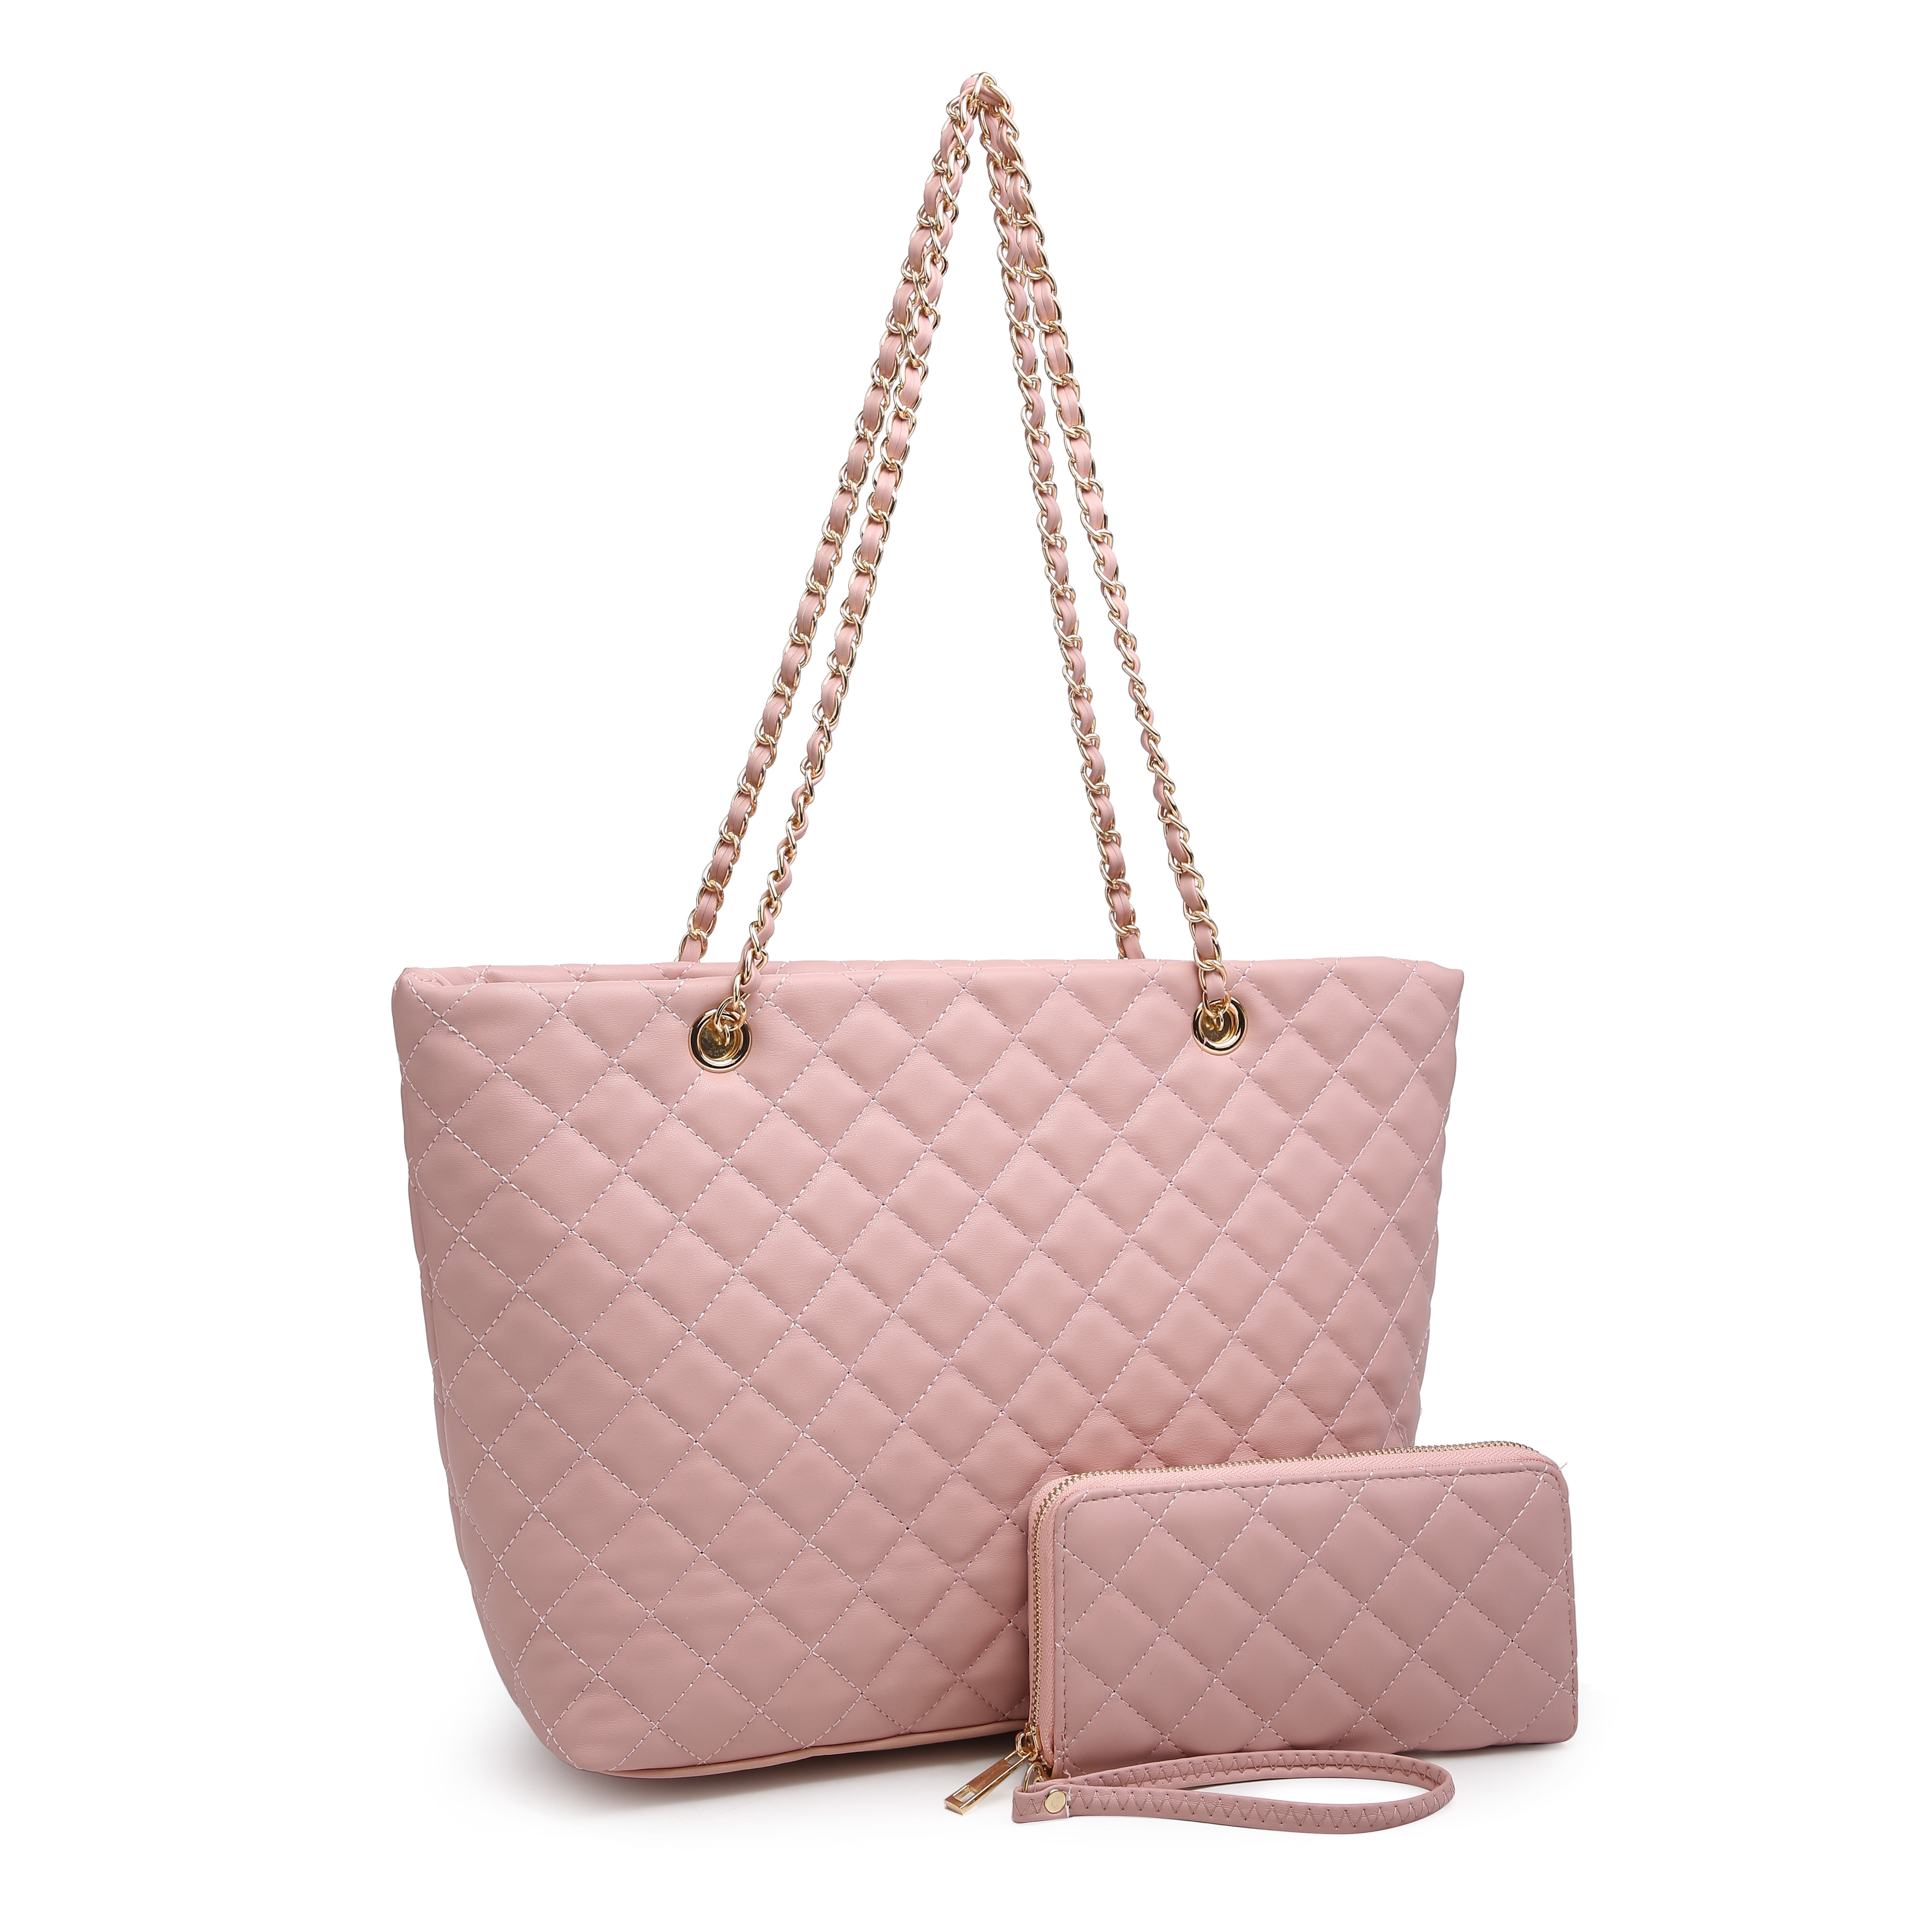 Quality Plush Crossbody Bags For Women Designer Small Handbags Chain Shoulder Me